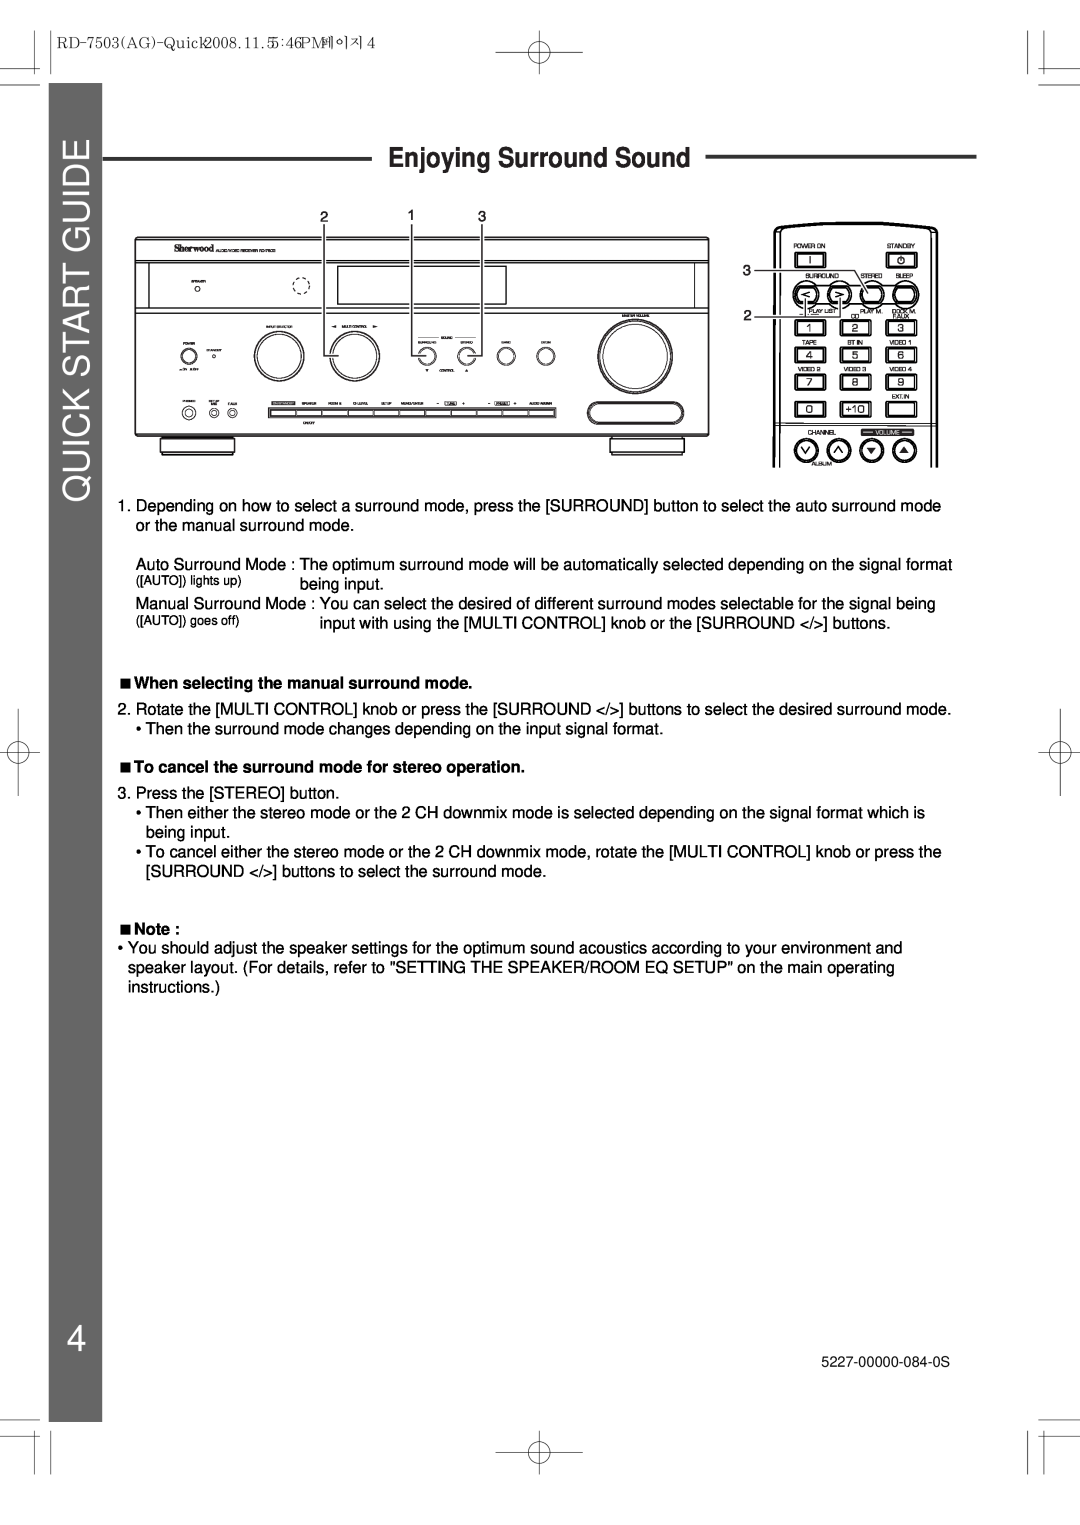 Sherwood 5227-00000-084-0S quick start Quick Start Guide, Enjoying Surround Sound, When selecting the manual surround mode 